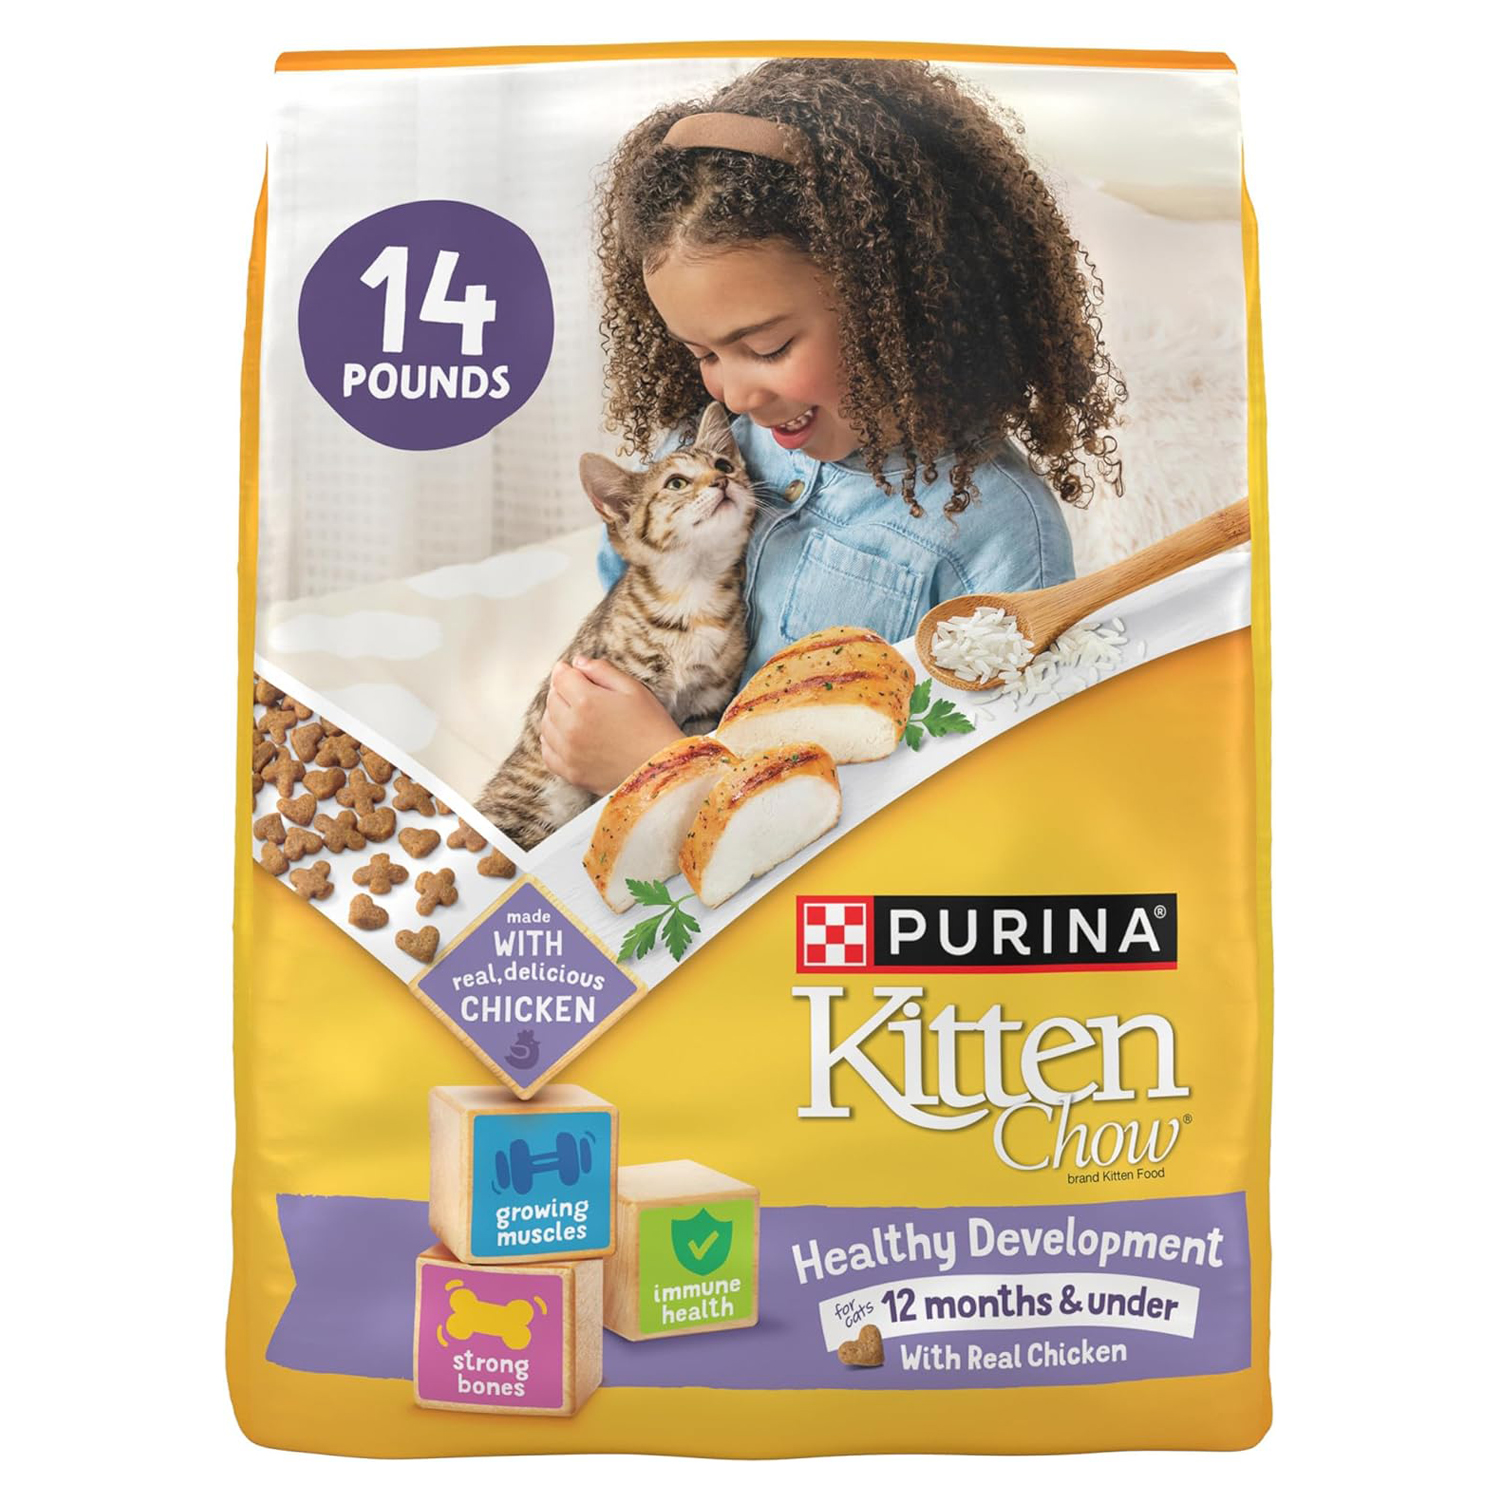 Purina Kitten Chow Kitten Food Healthy Development with Real Chicken Dry Kitten Food